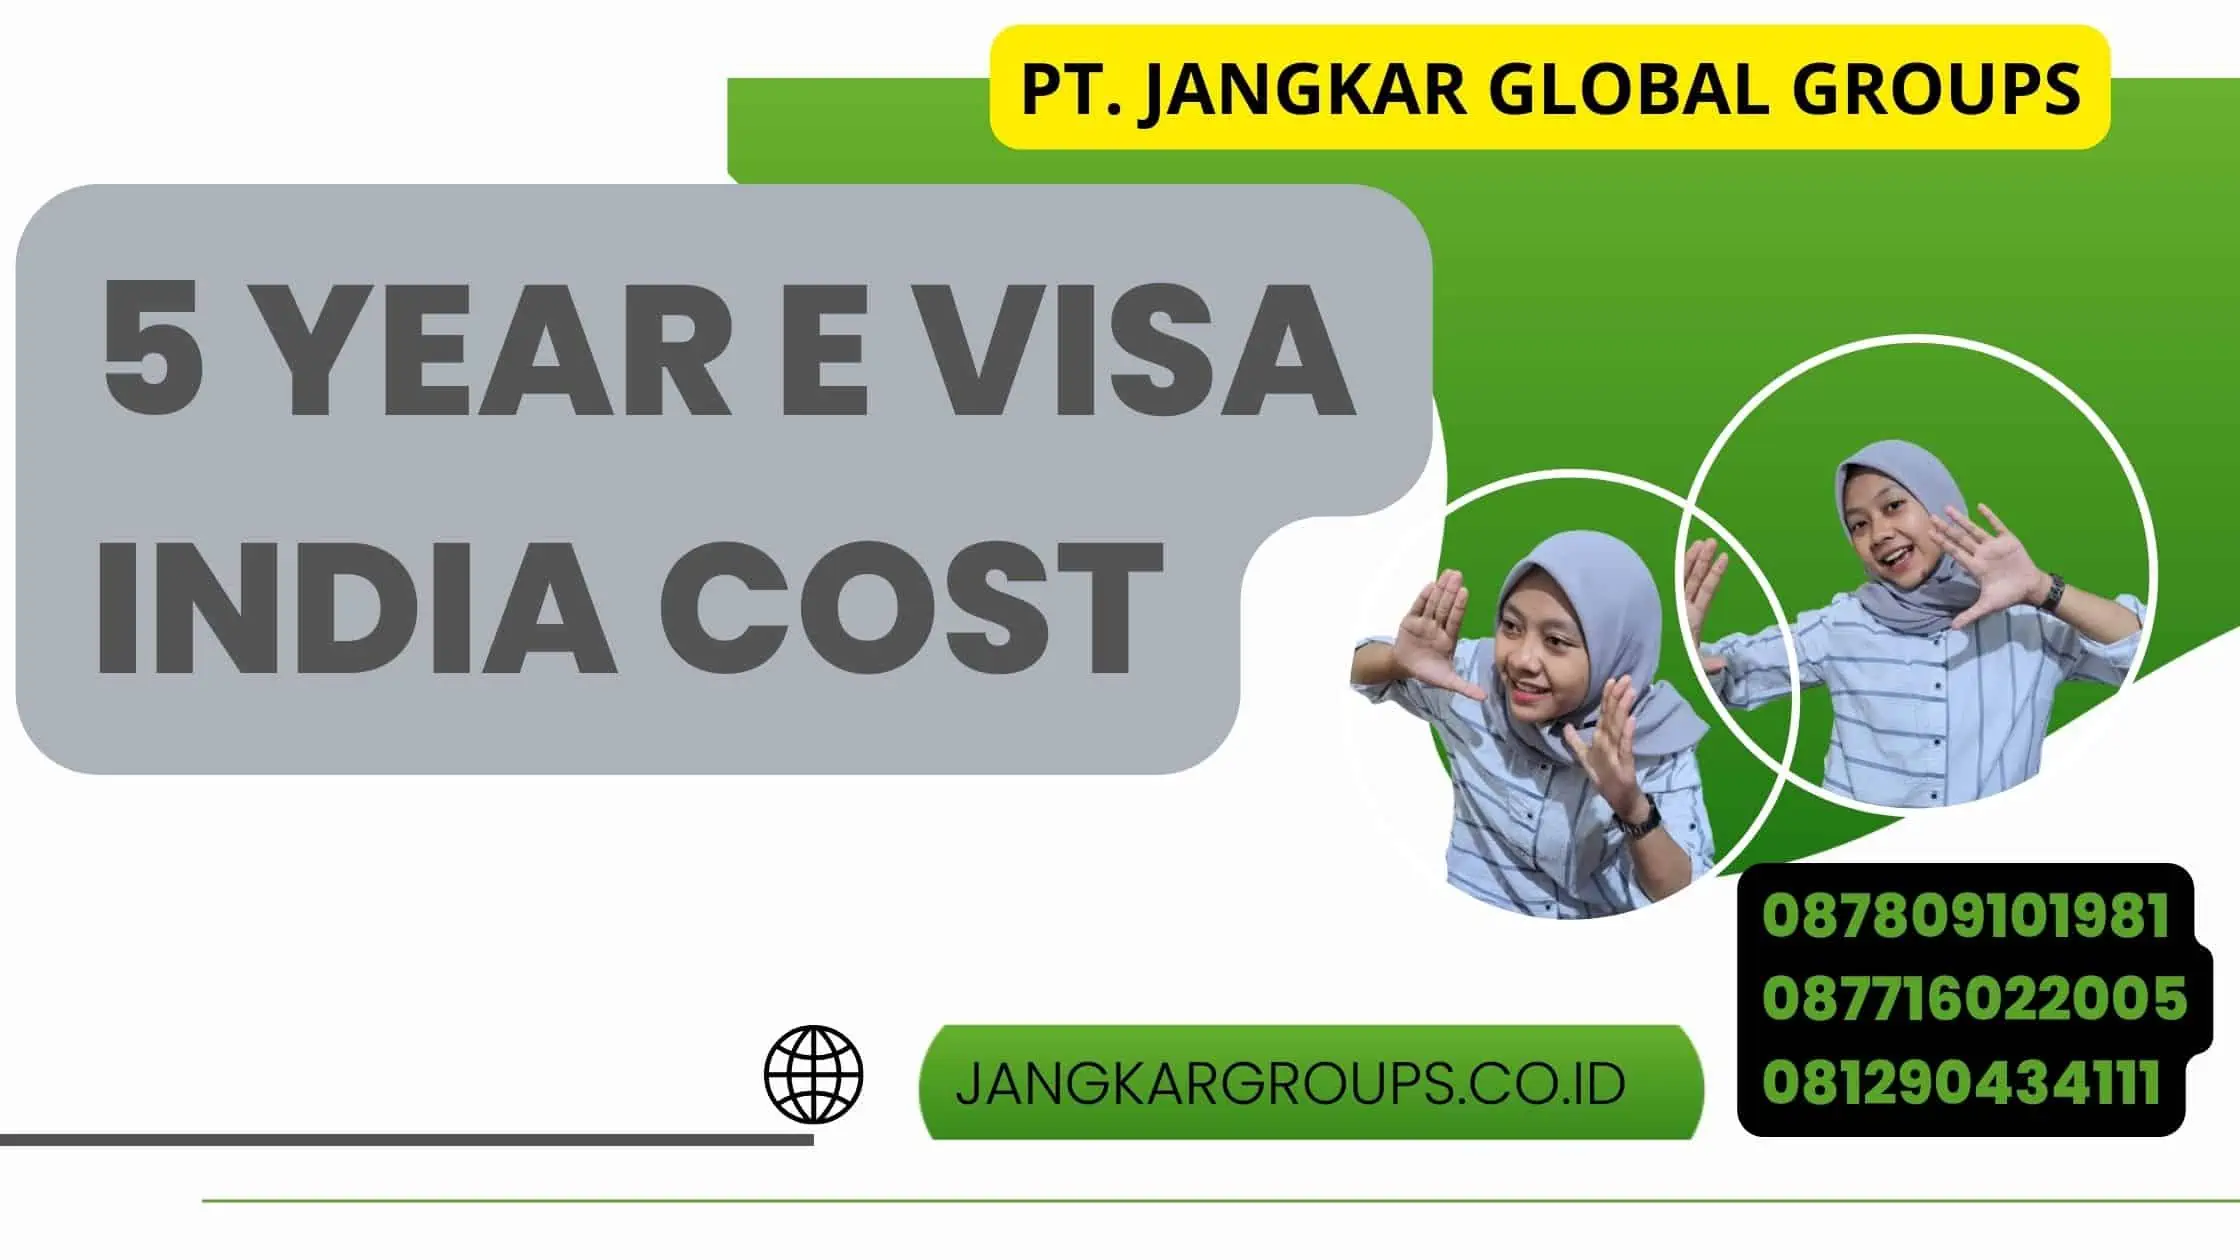 5 Year E Visa India Cost